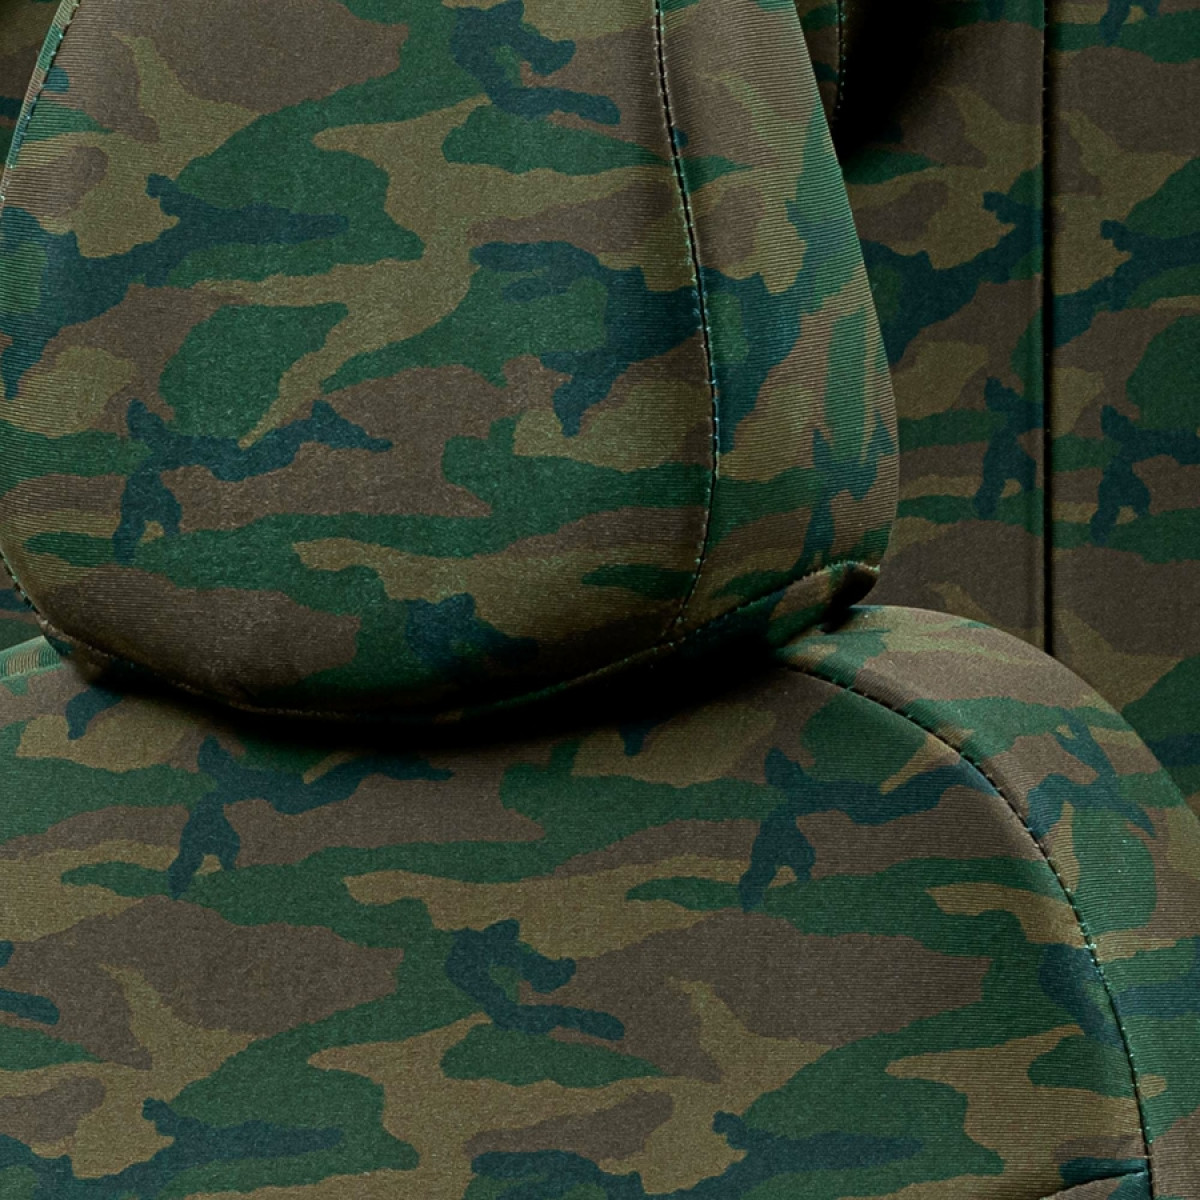 Safari seat covers (textile) Nissan X-trail III